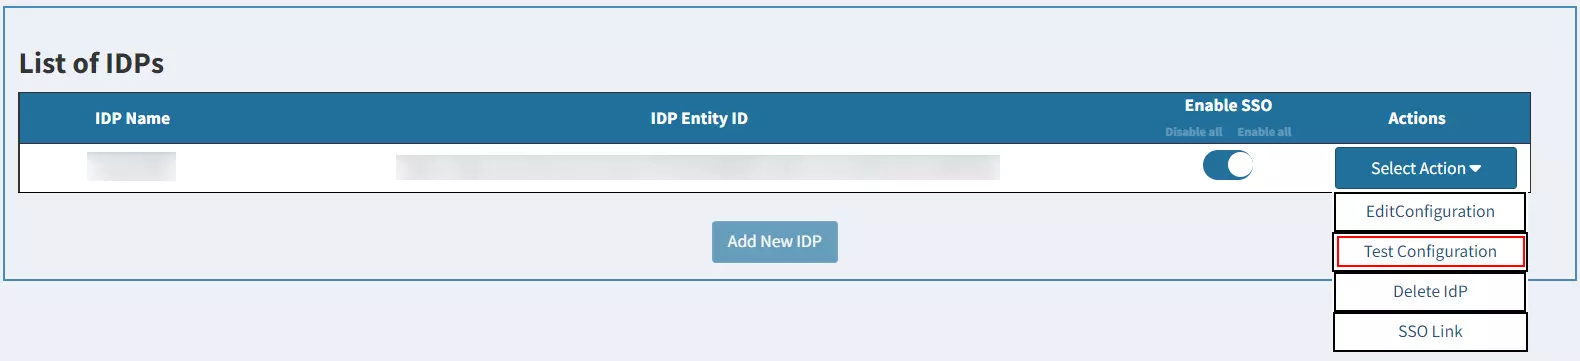 nopCommerce Single Sign-On (SSO) using Okta as IDP - Click on Test Configuration